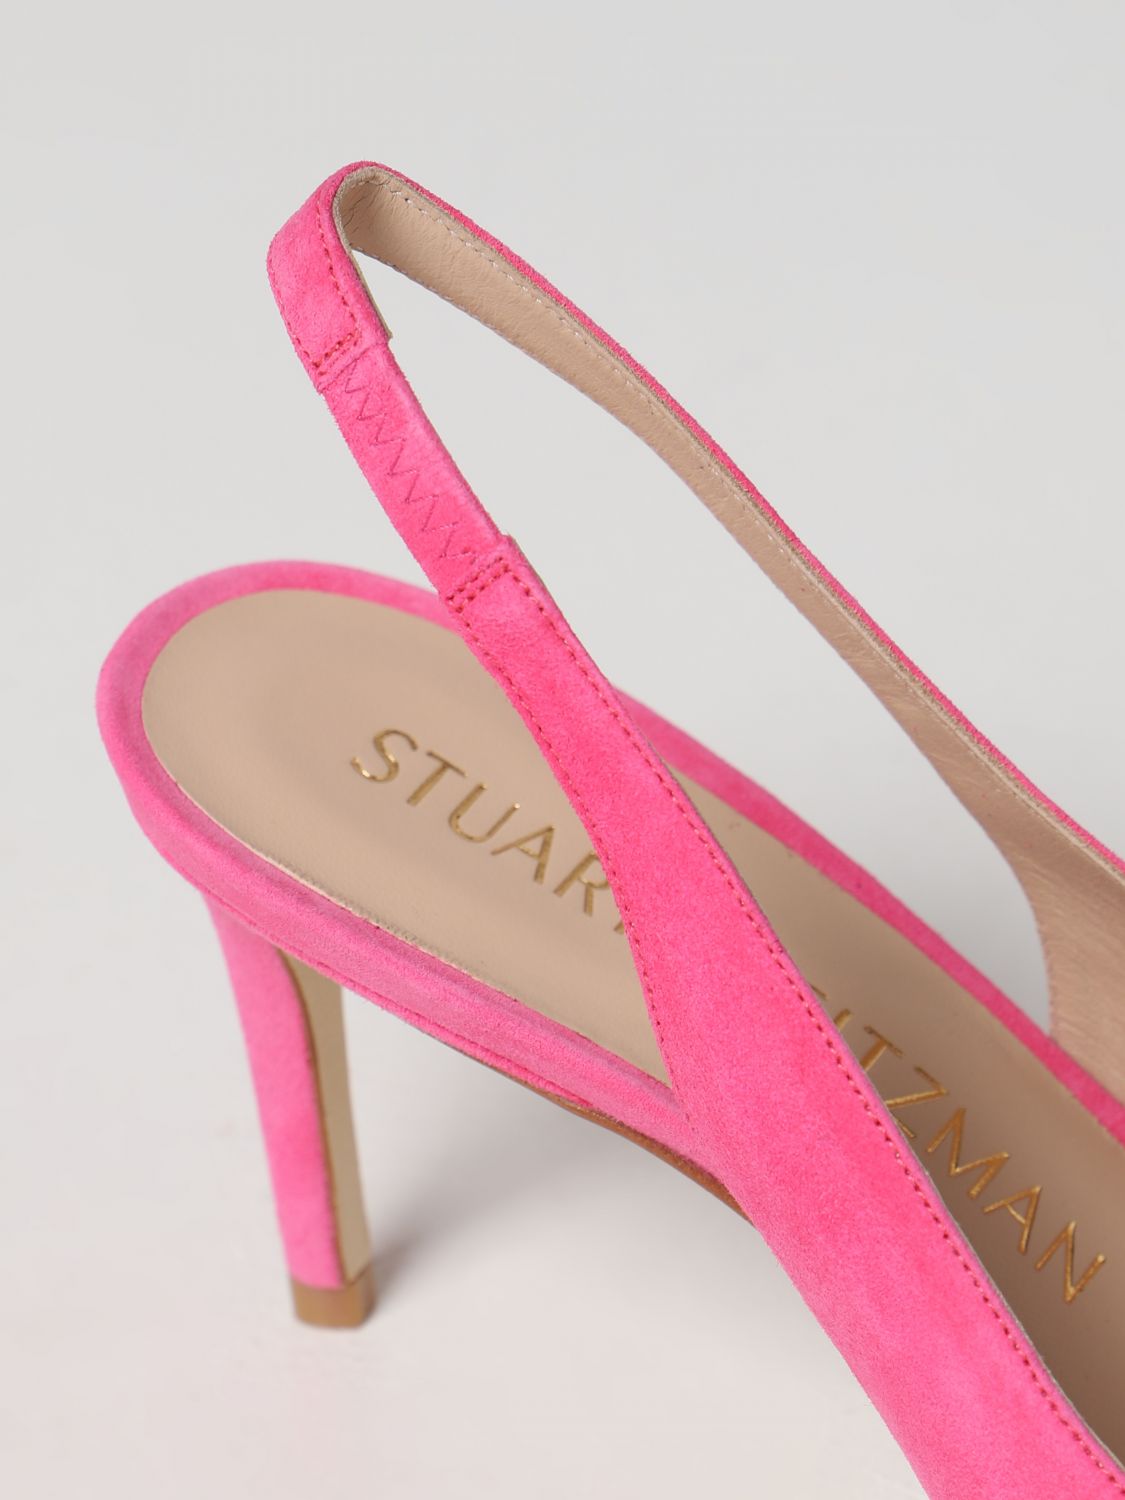 Foto Ijzig medeleerling STUART WEITZMAN: high heel shoes for woman - Fuchsia | Stuart Weitzman high  heel shoes SC424 online on GIGLIO.COM